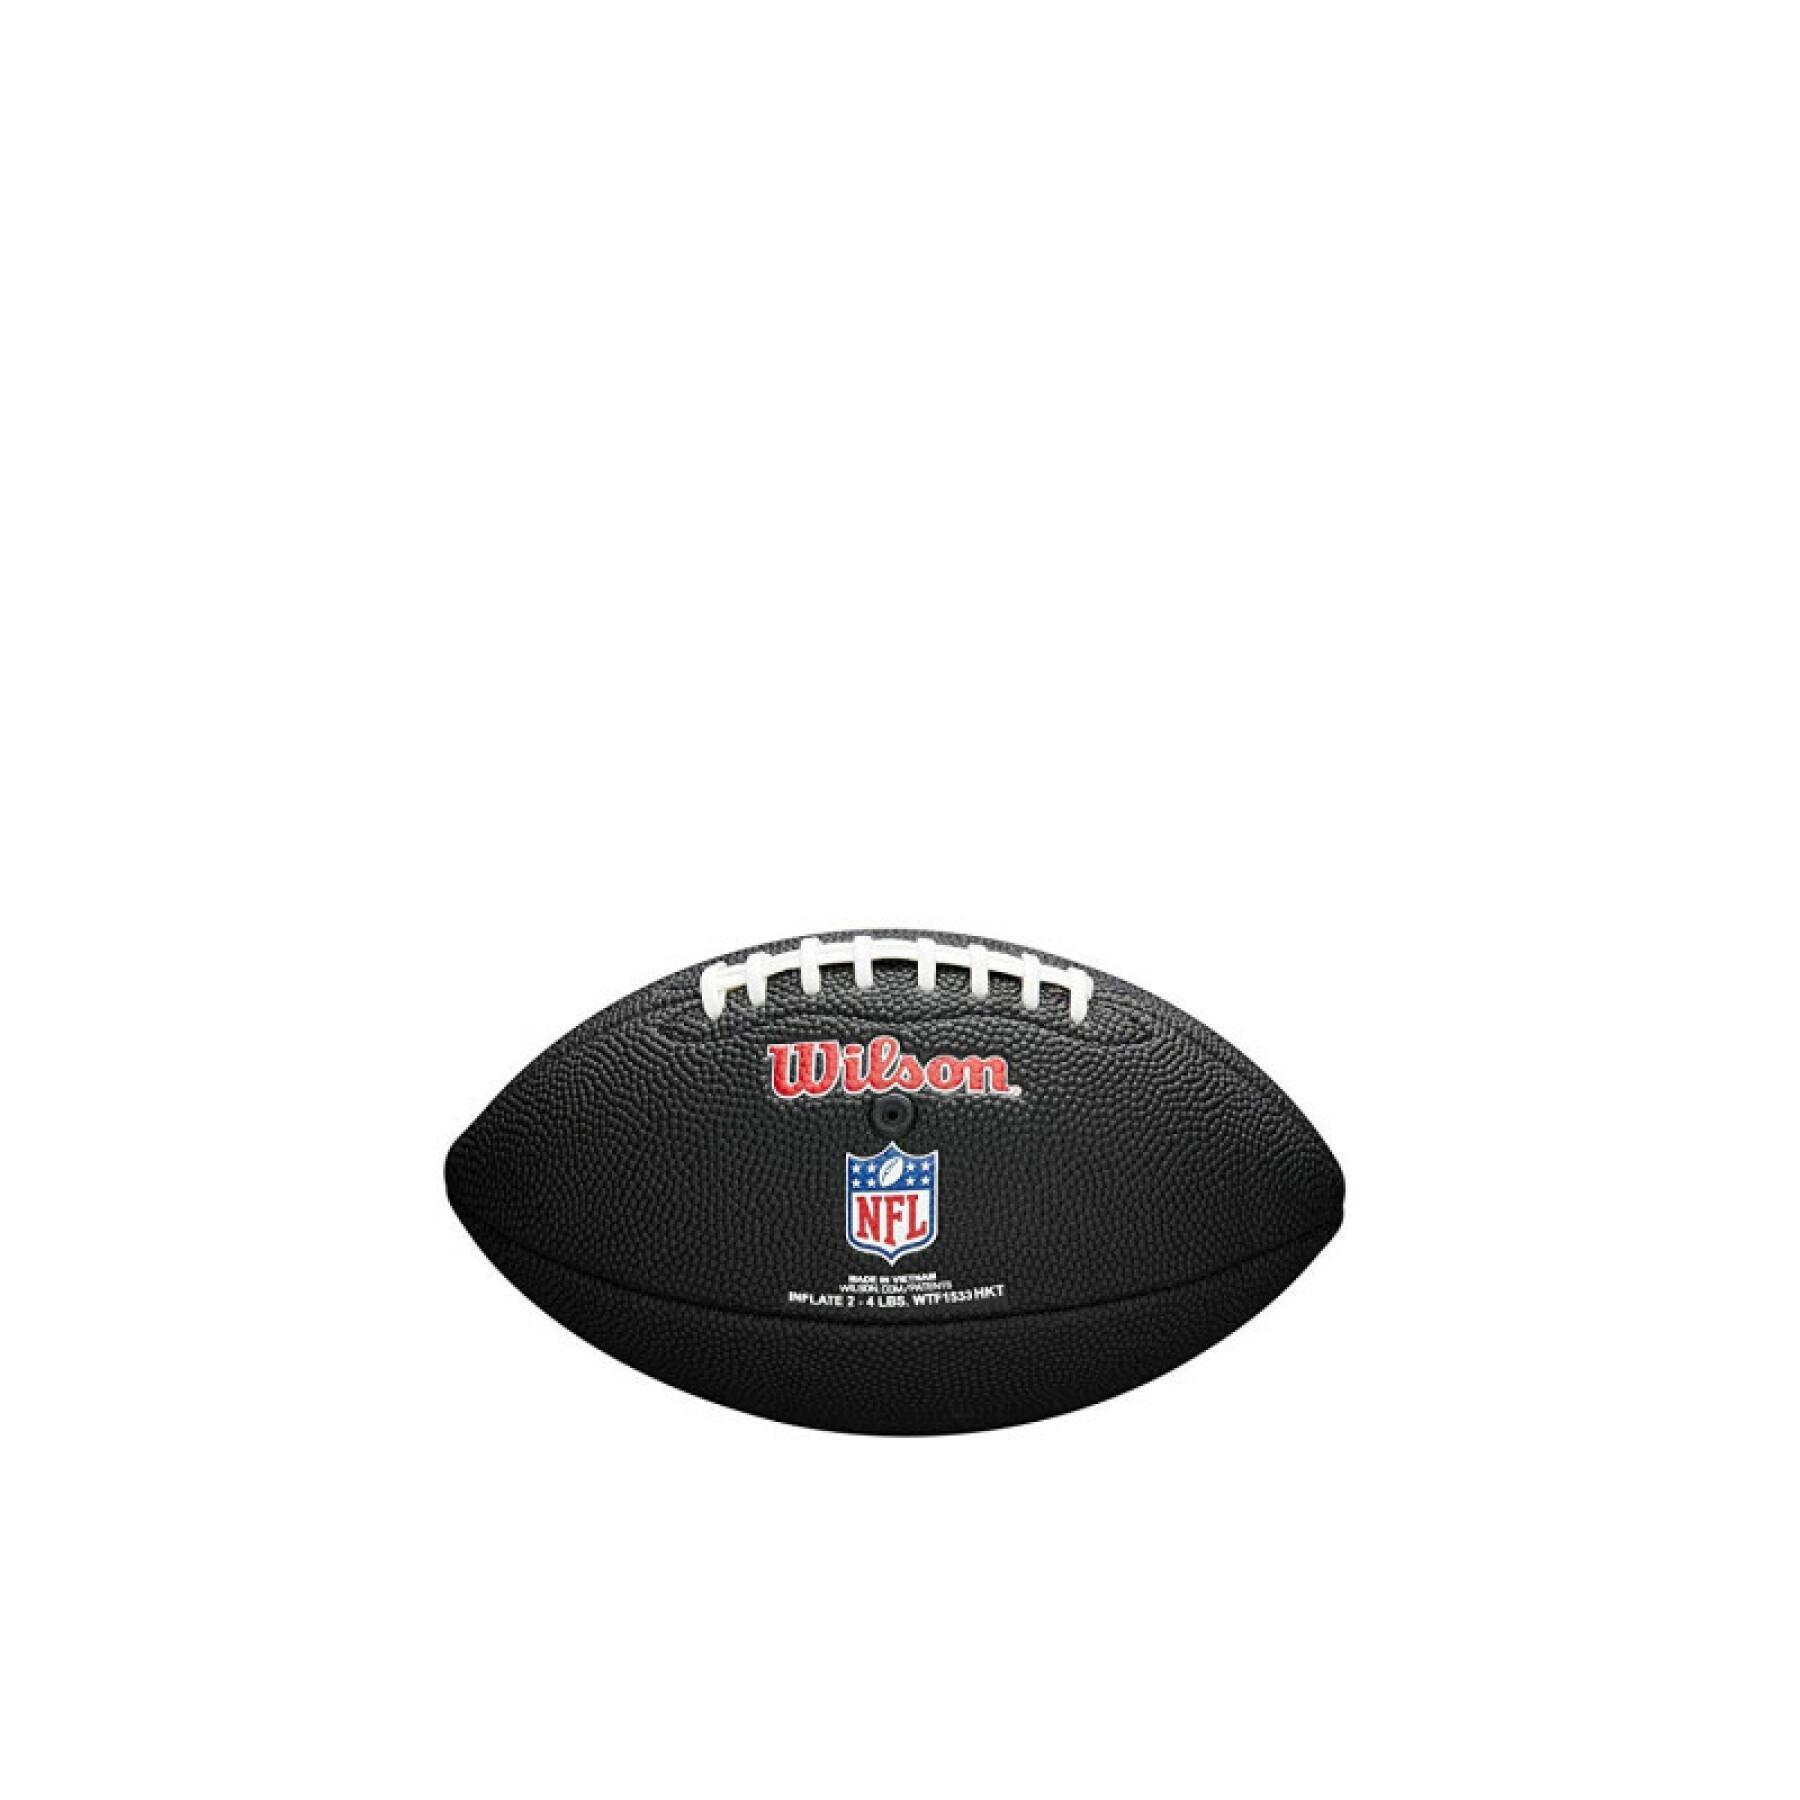 MiniBalón para niños Wilson Ravens NFL